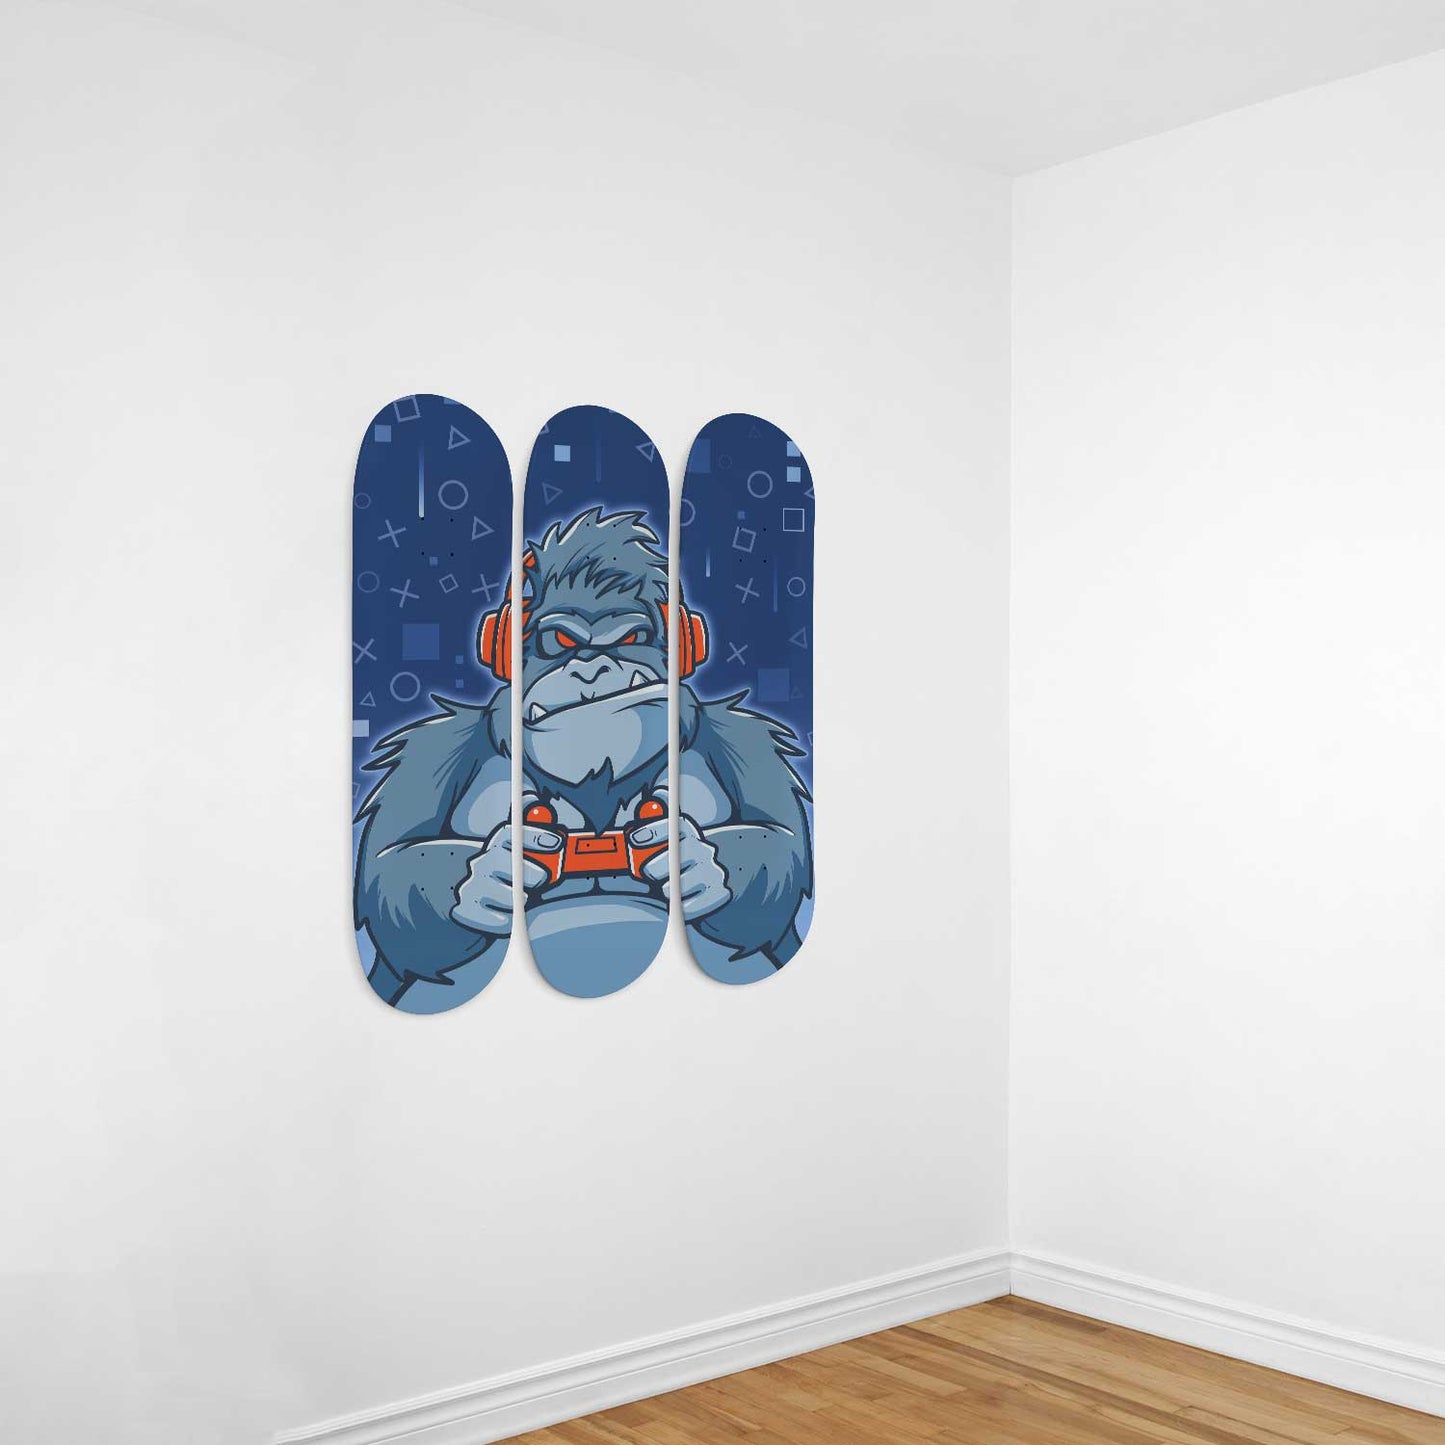 Gorilla Gaming 3 Deck Skateboard Wall Art: Unleash the Beast